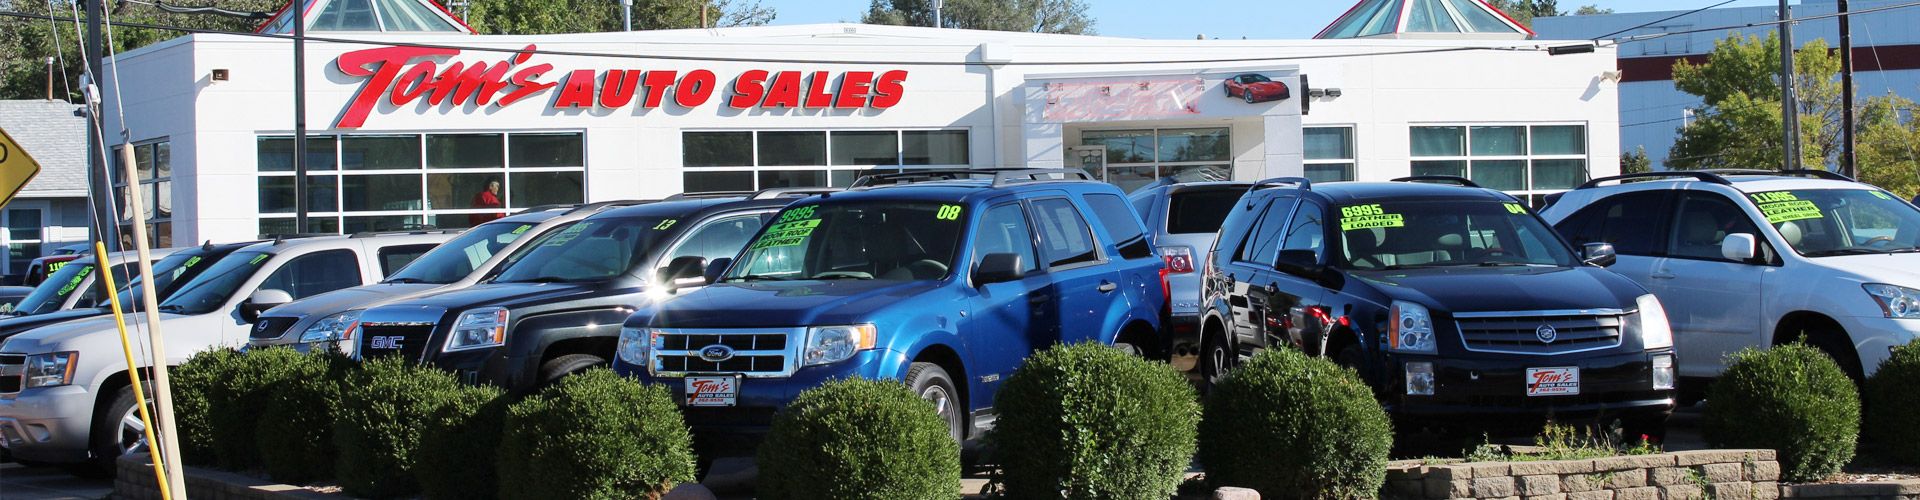 Used Car, Truck, Van Dealer in Des Moines, IA | Tom's Auto Sales